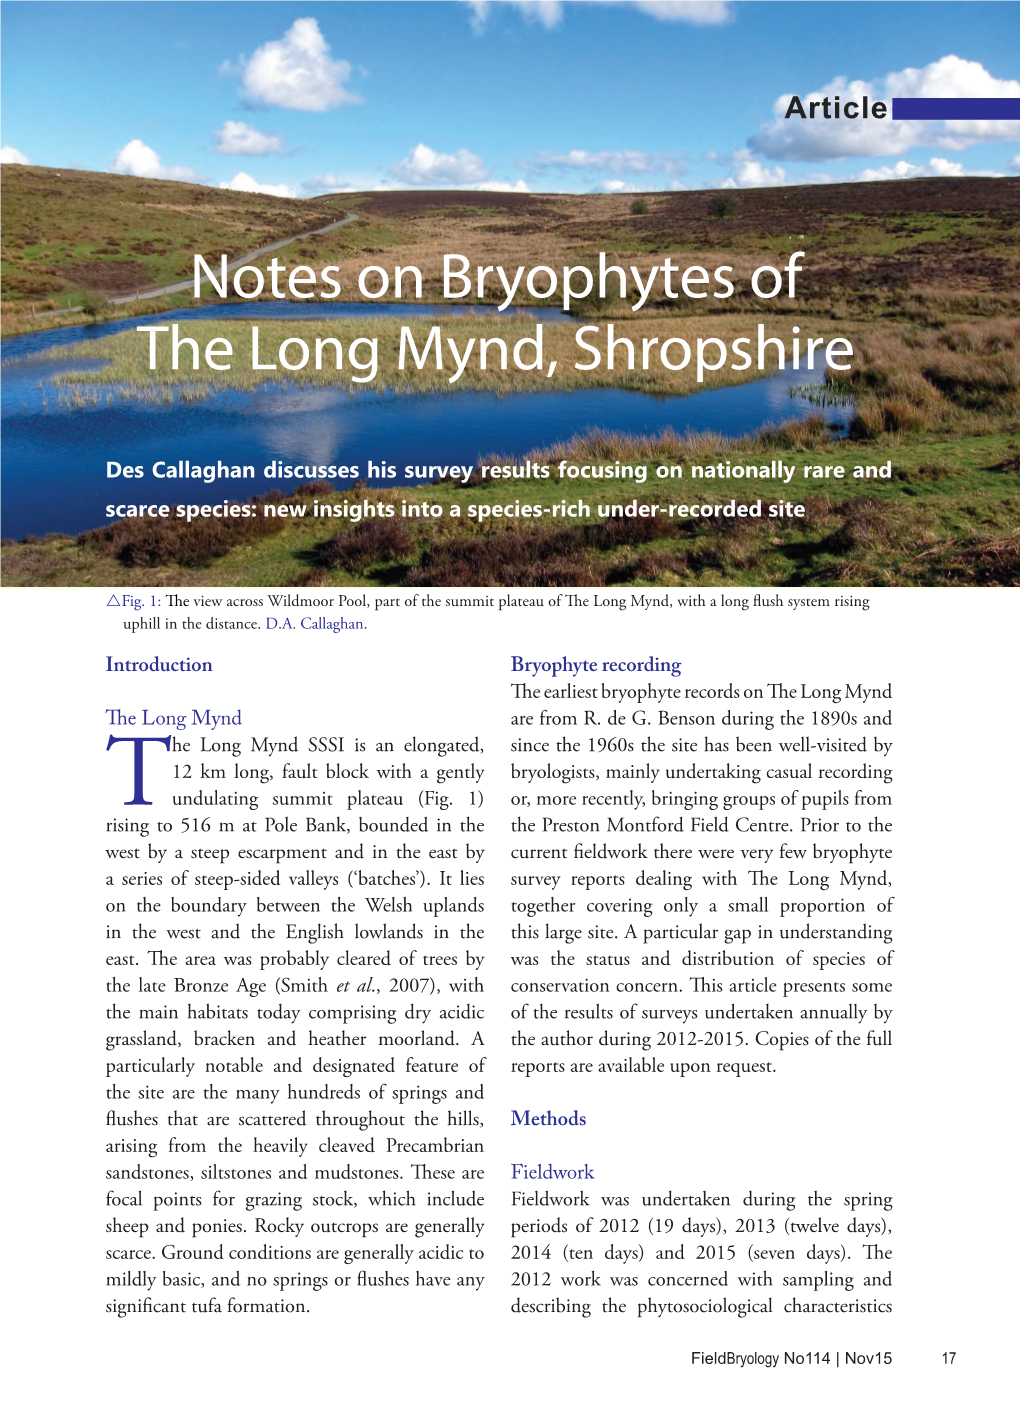 Notes on Bryophytes of the Long Mynd, Shropshire